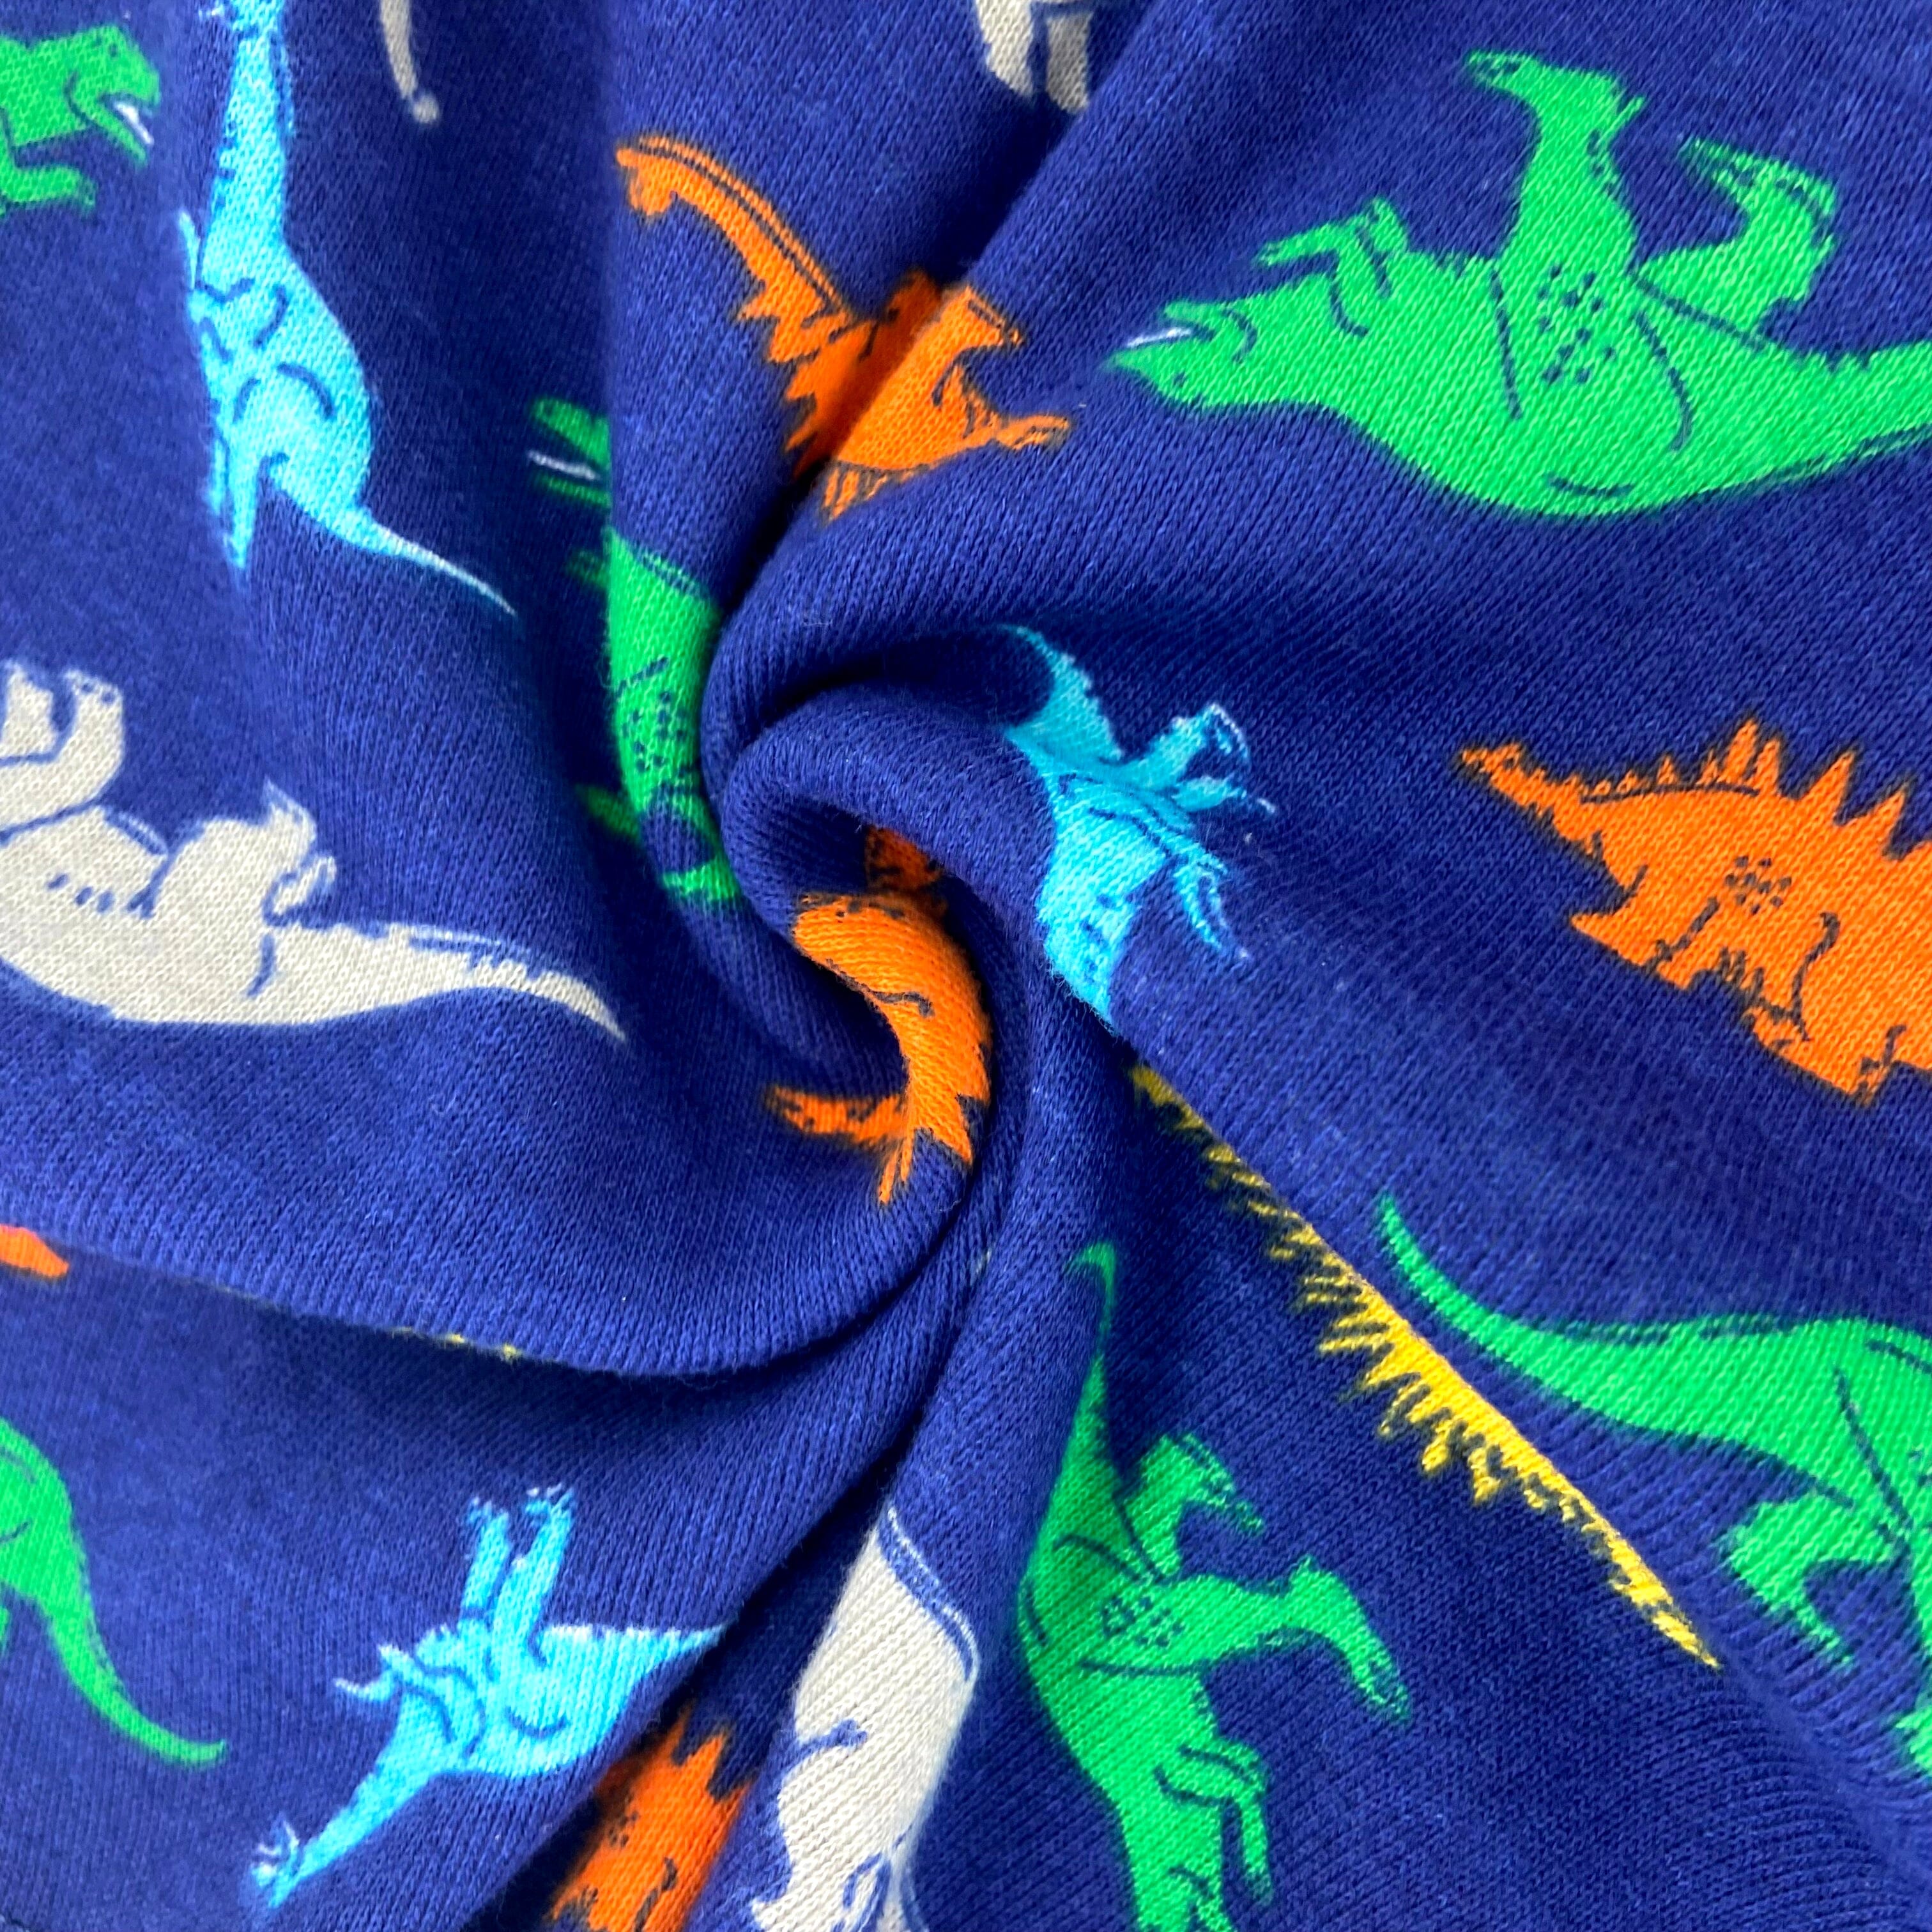 Men's Soft Comfy Colorful Dino Jurassic Print Cotton Pajama PJ Shorts